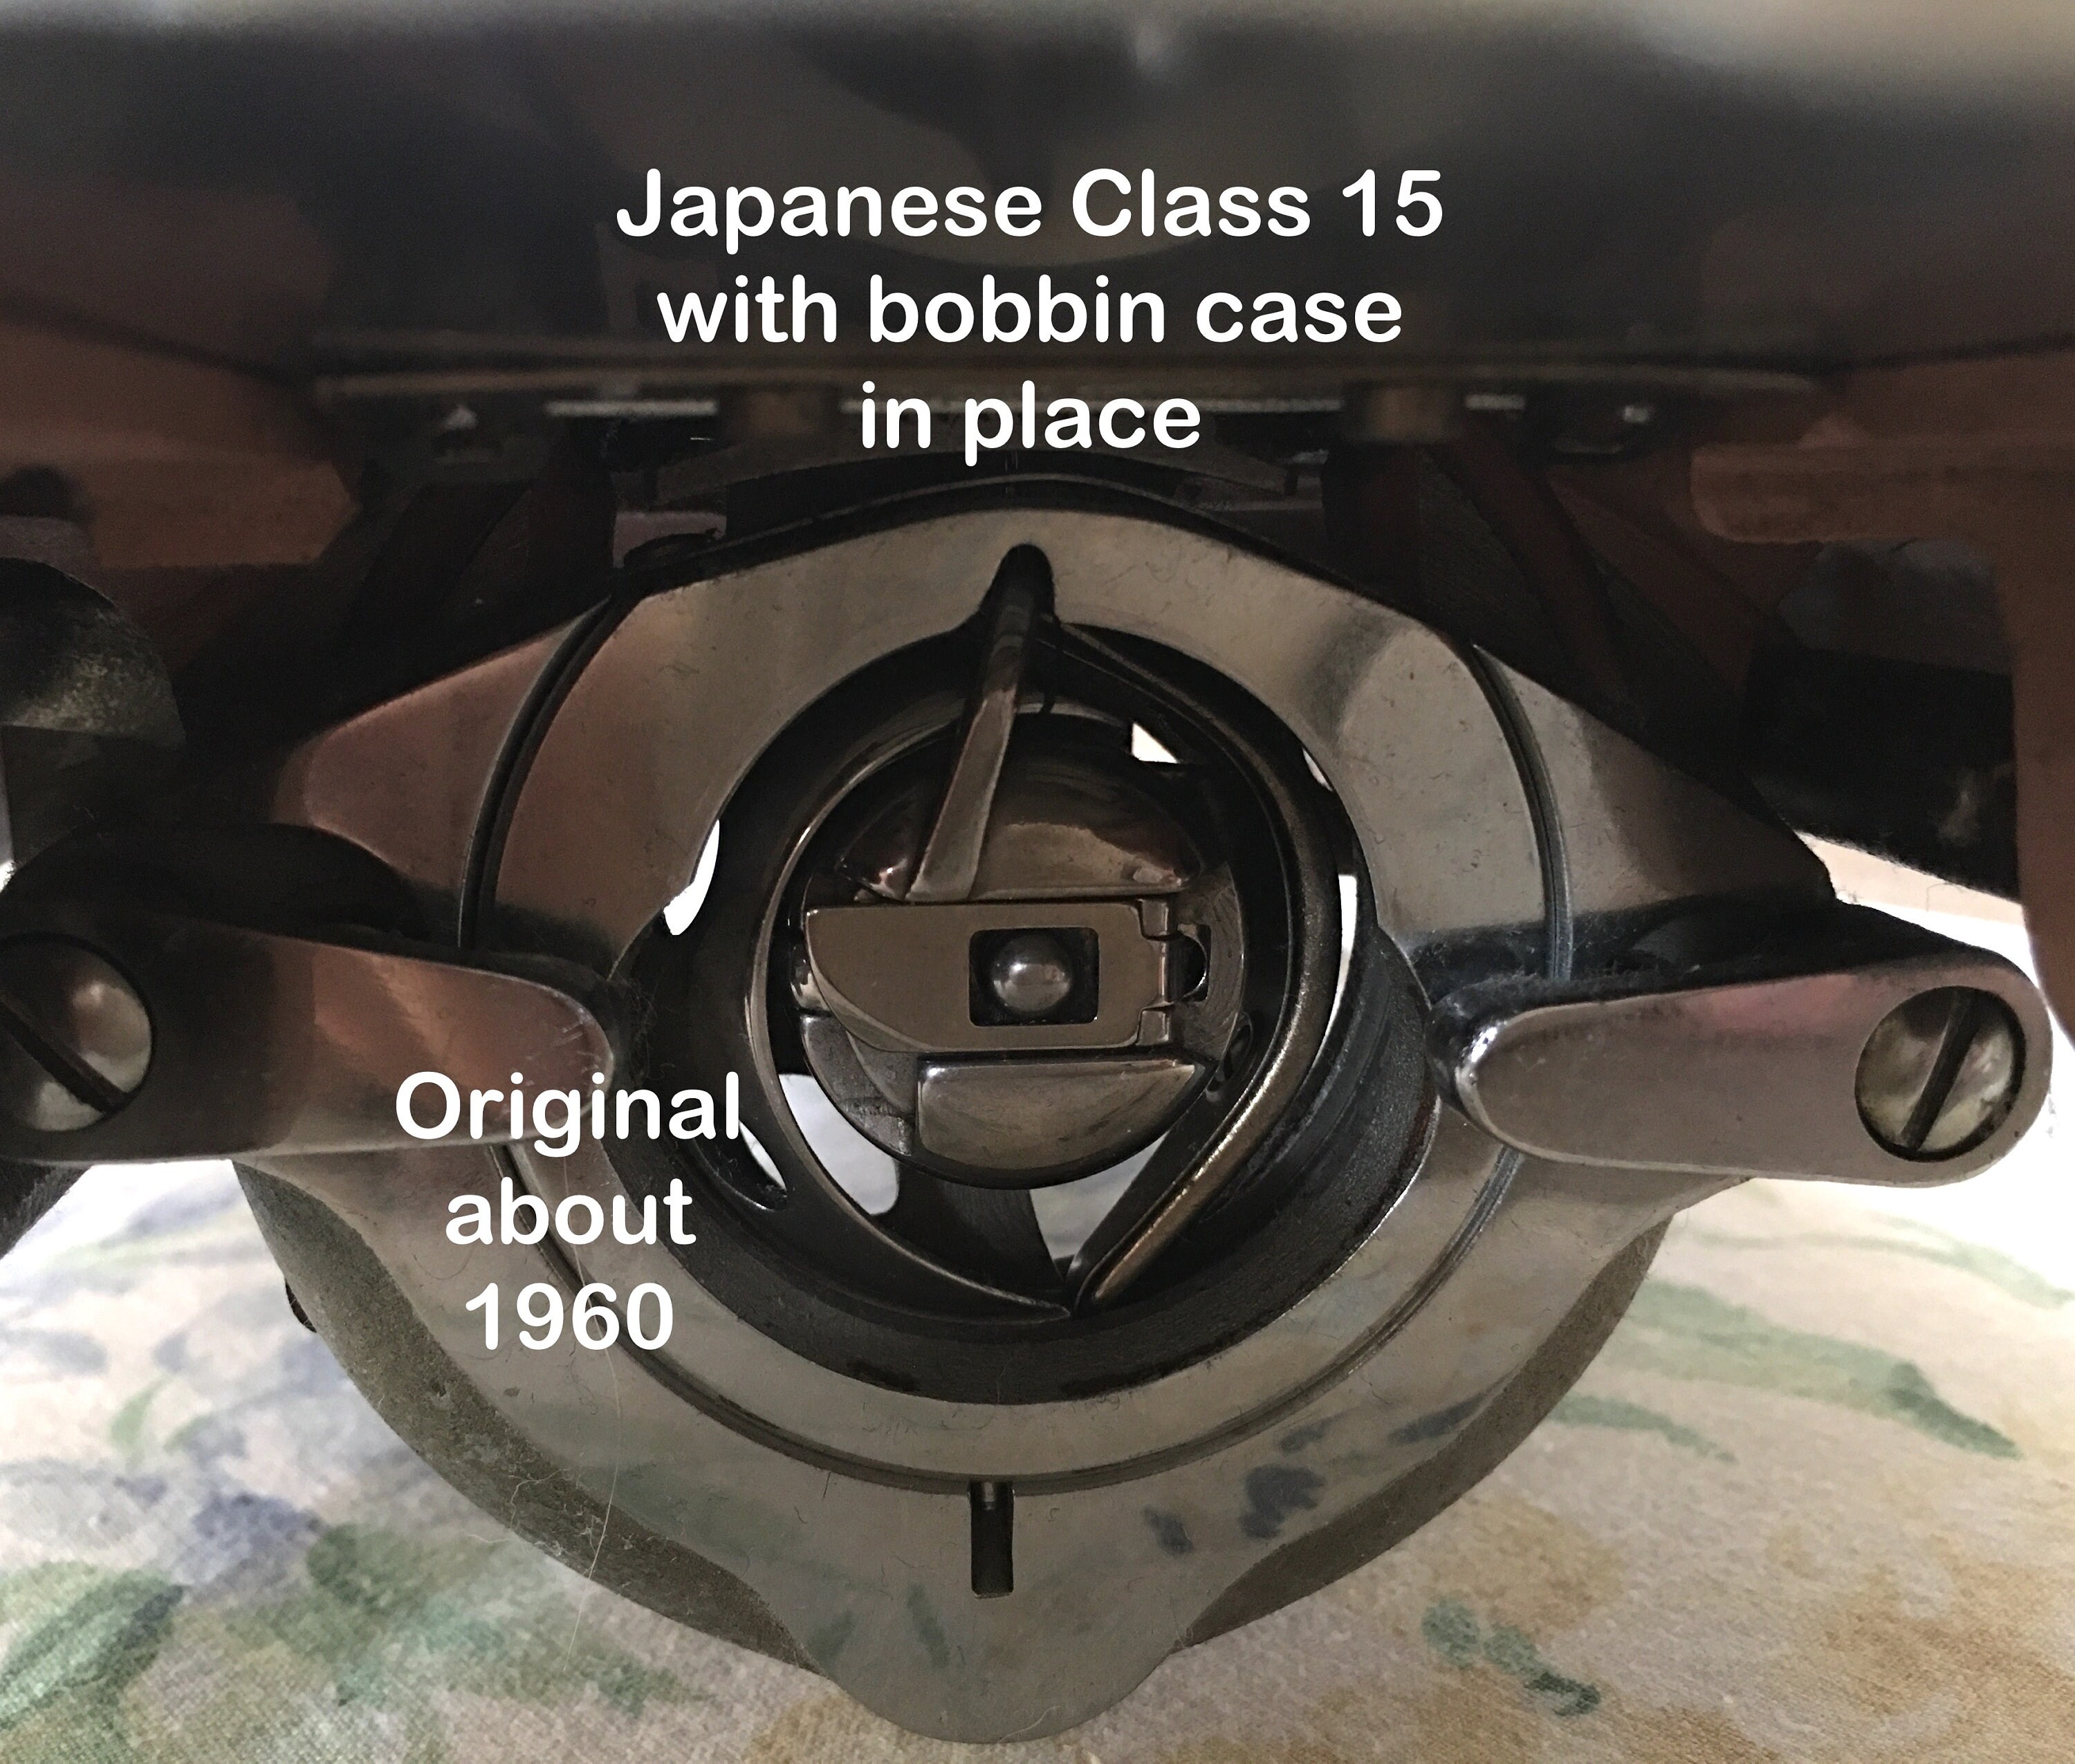 Bobbin Case, Class 15 Japanese machines